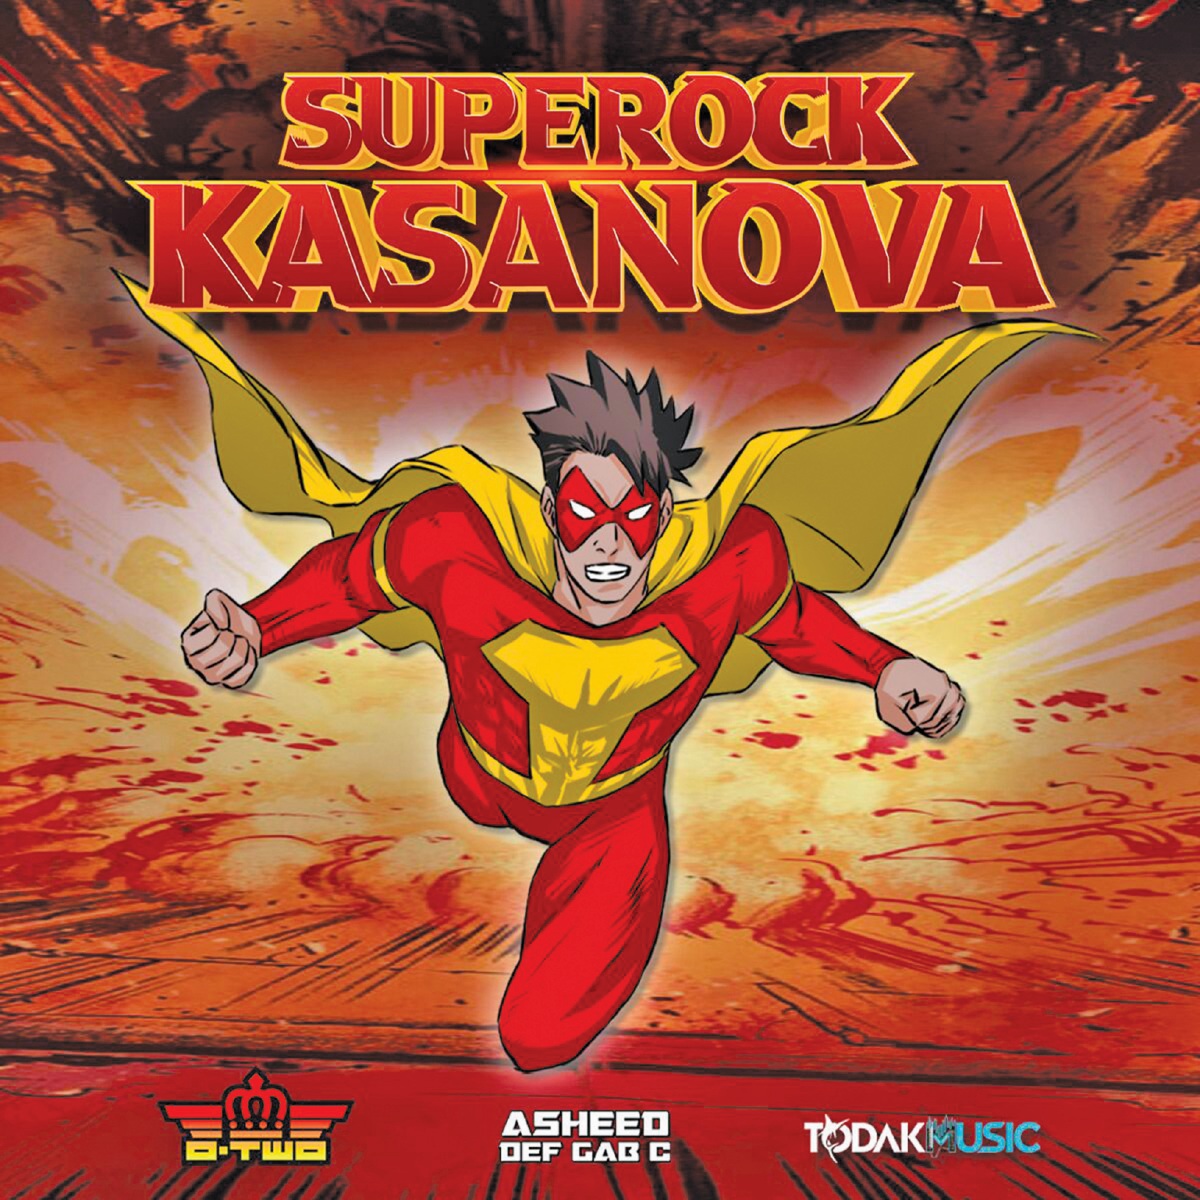 SINGLE Superock Kasanova tampil gabungan kumpulan OTwo dan Asheed Def Gab C.